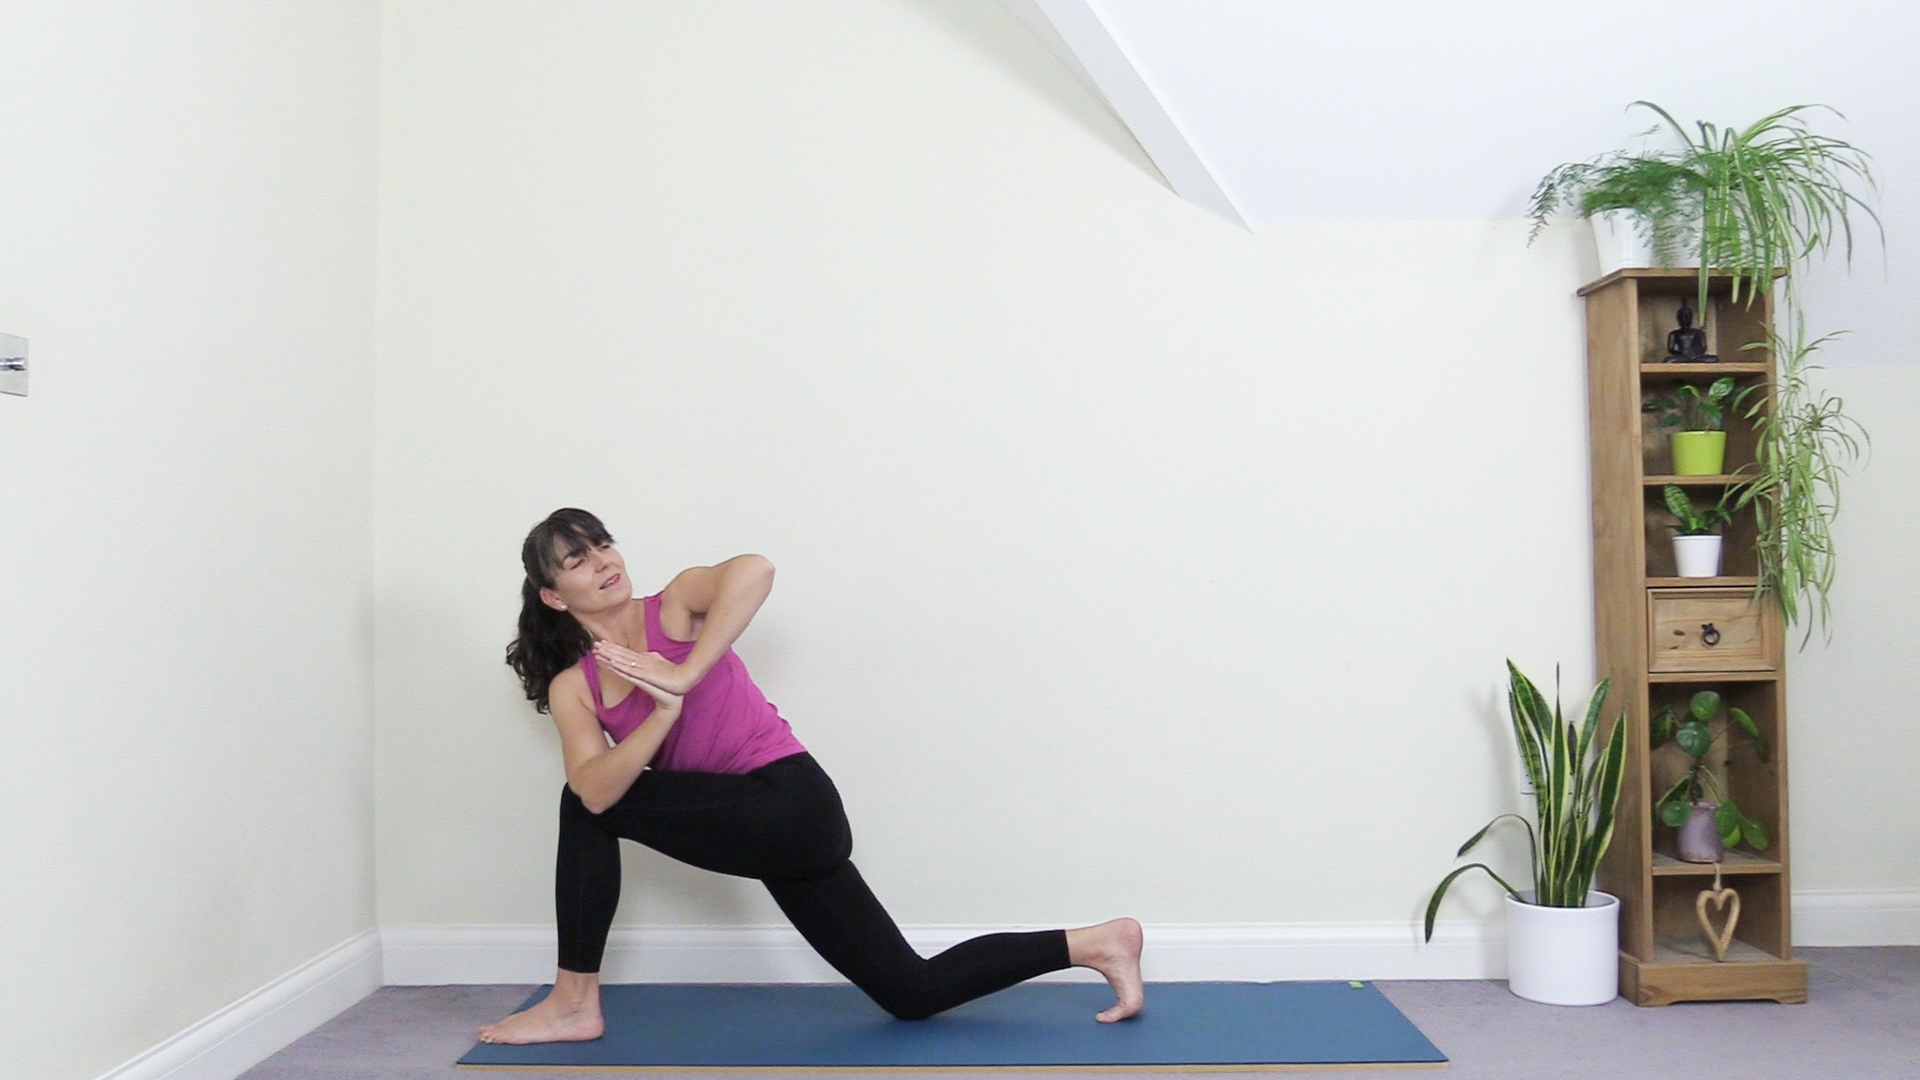 Astha Yoga - CHATURANGA DANDASANA/ FOUR LIMBED STAFF POSE